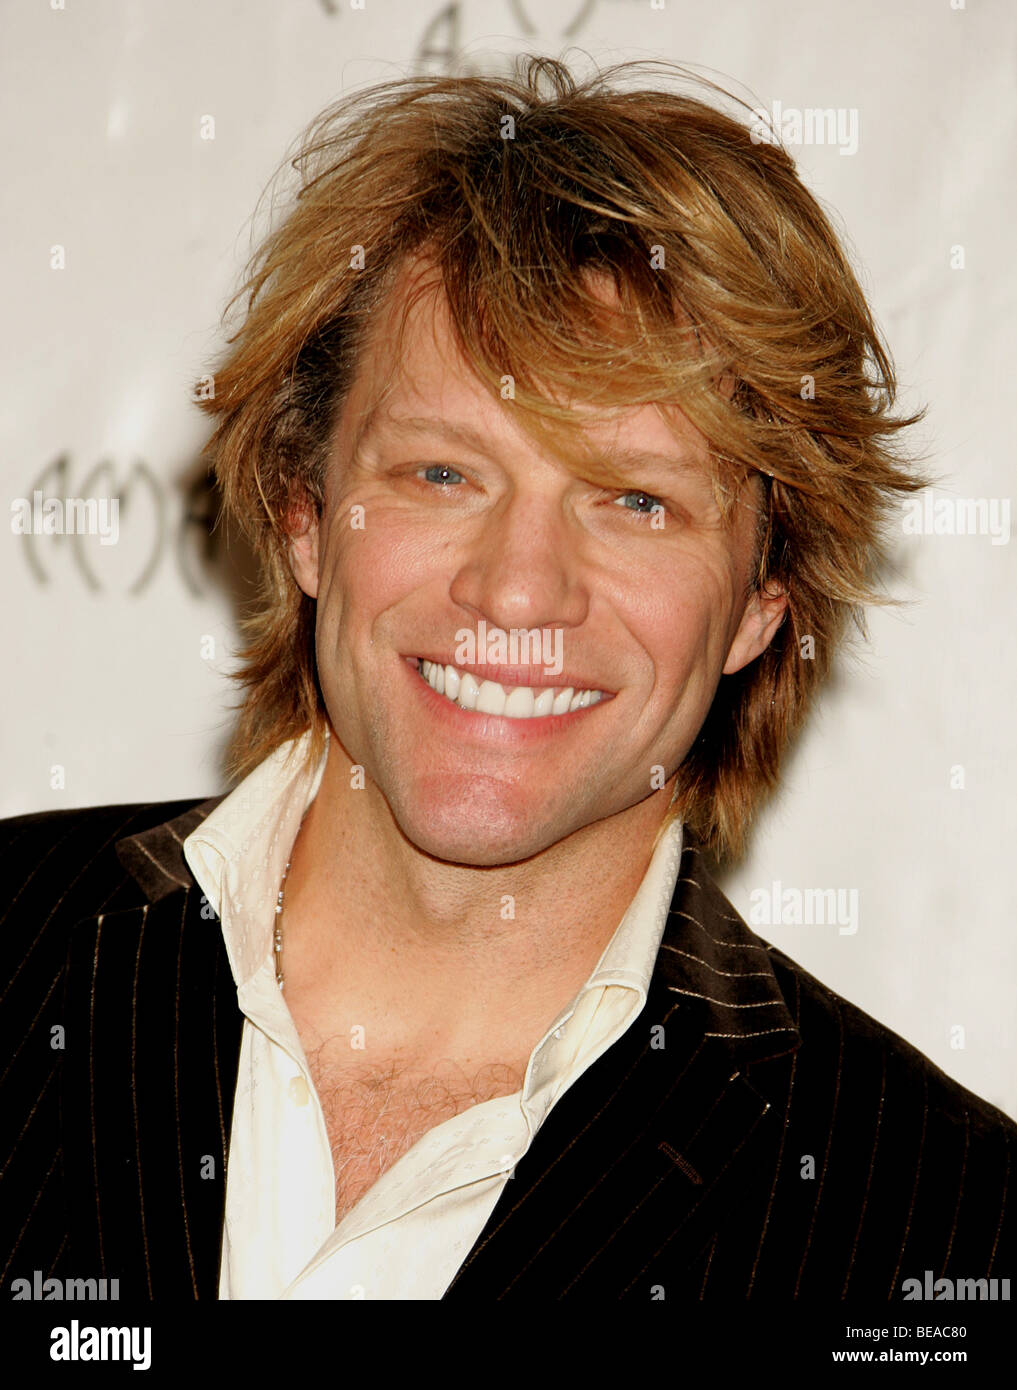 BON JOVI - Jon Bon Jovi US rock musician Stock Photo